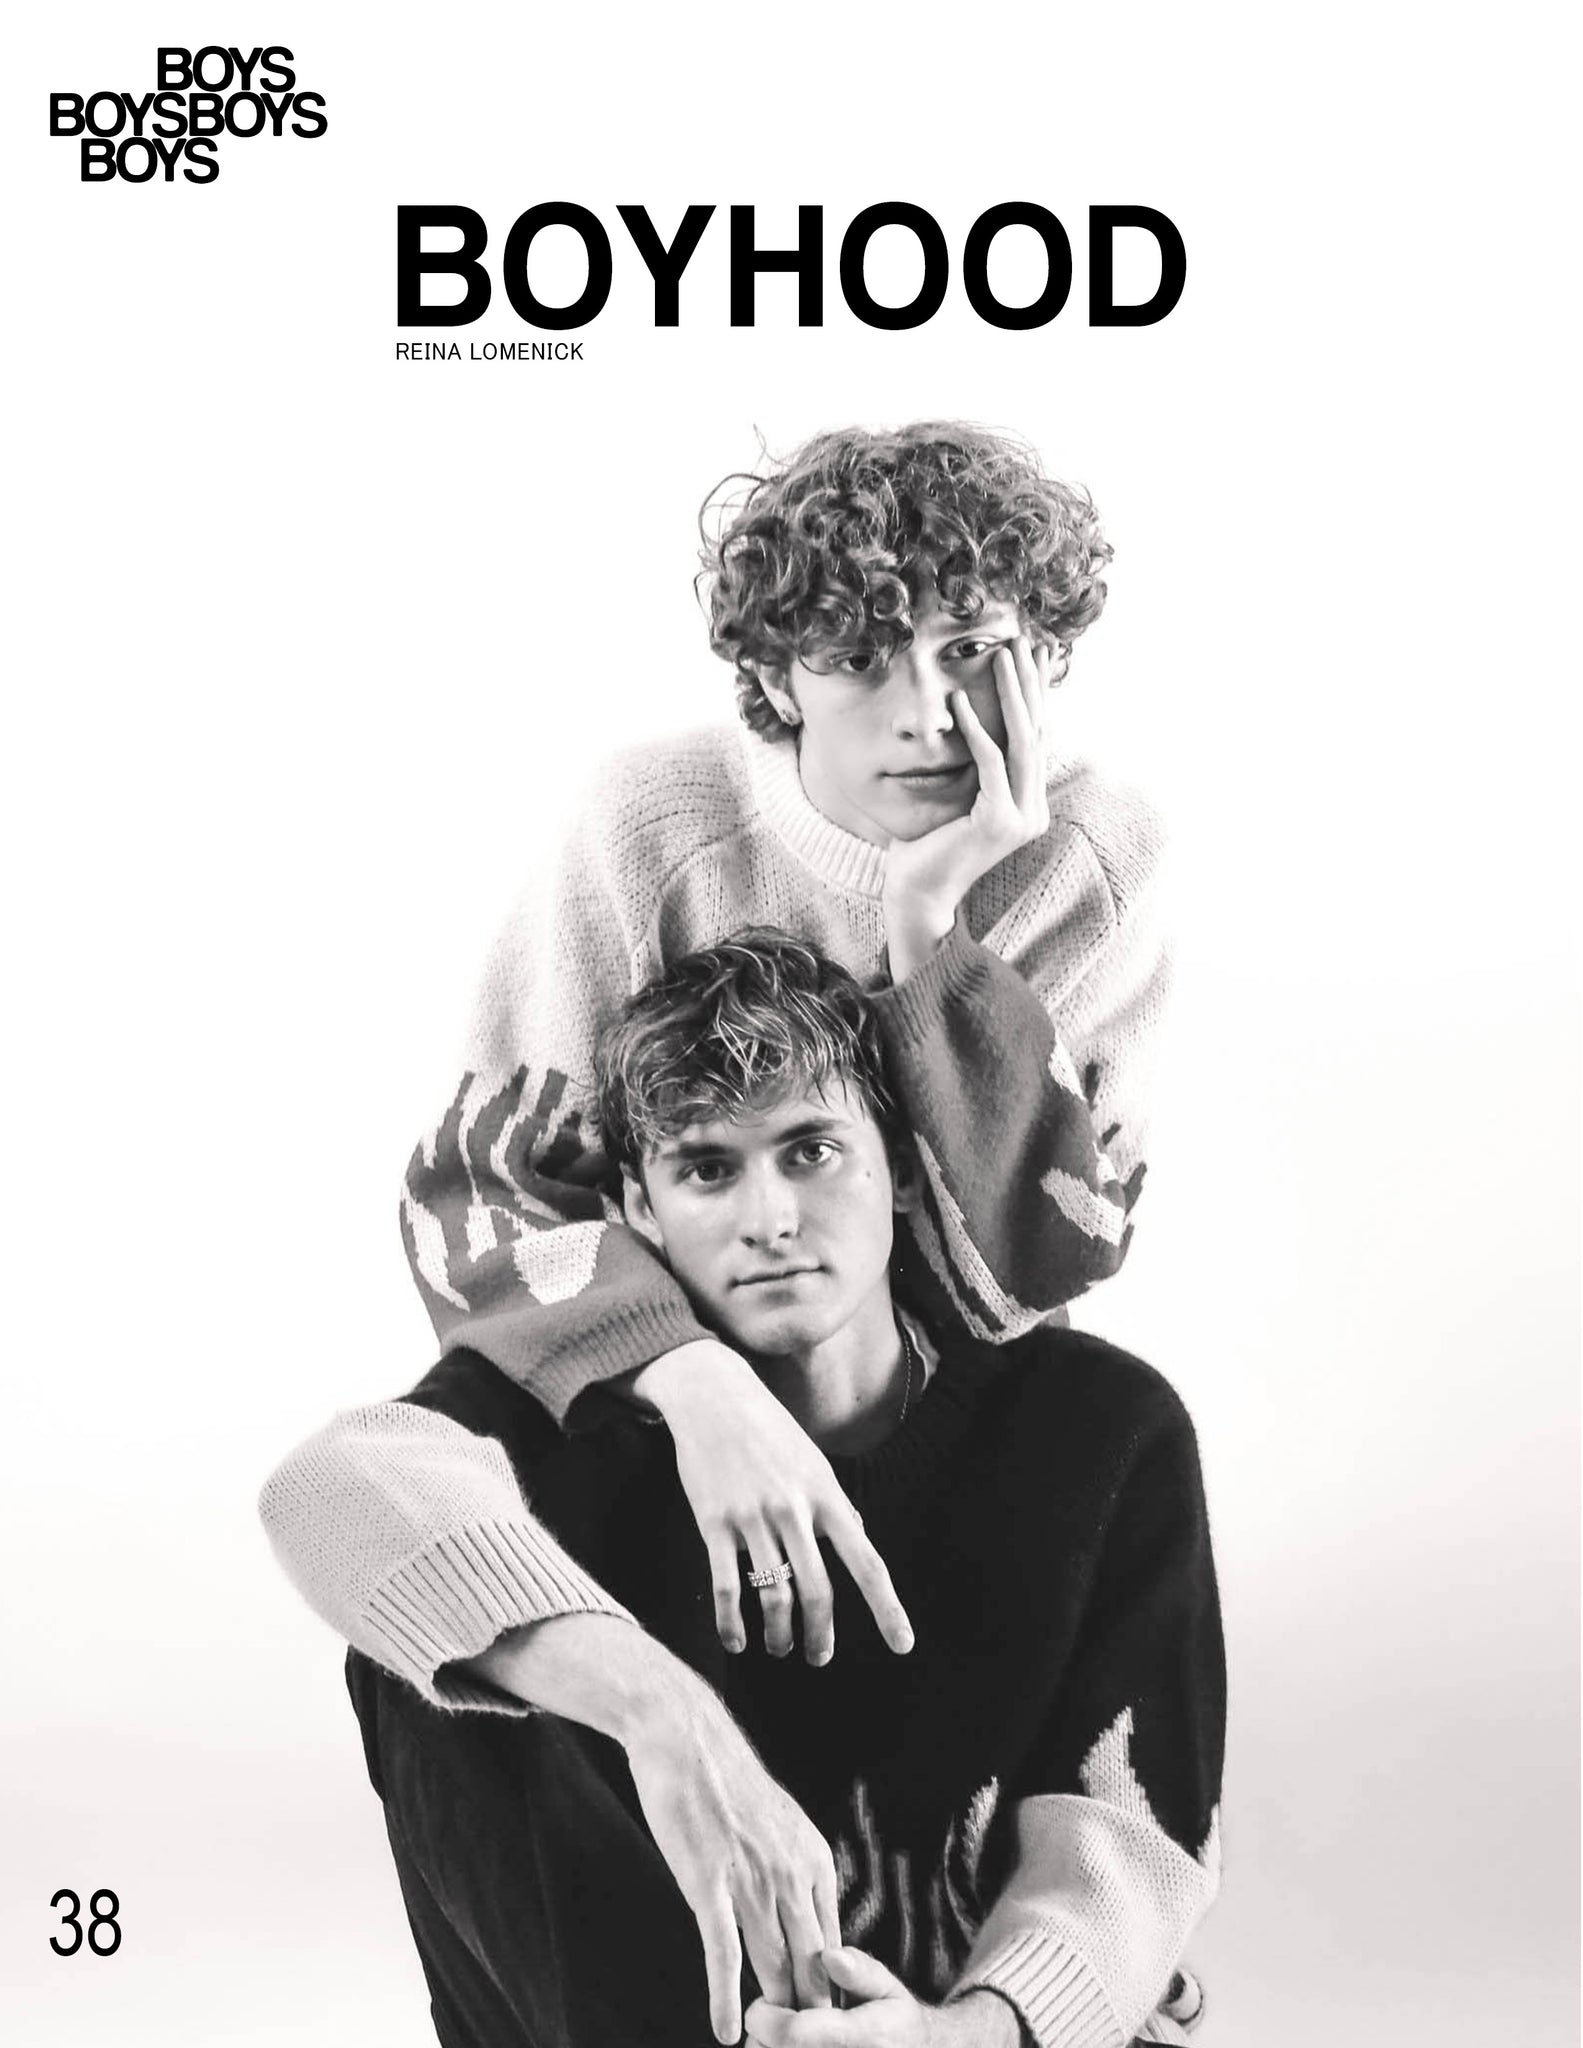 BOYS BOYS BOYS BOYS | VOLUME TWENTY FIVE | ISSUE #18